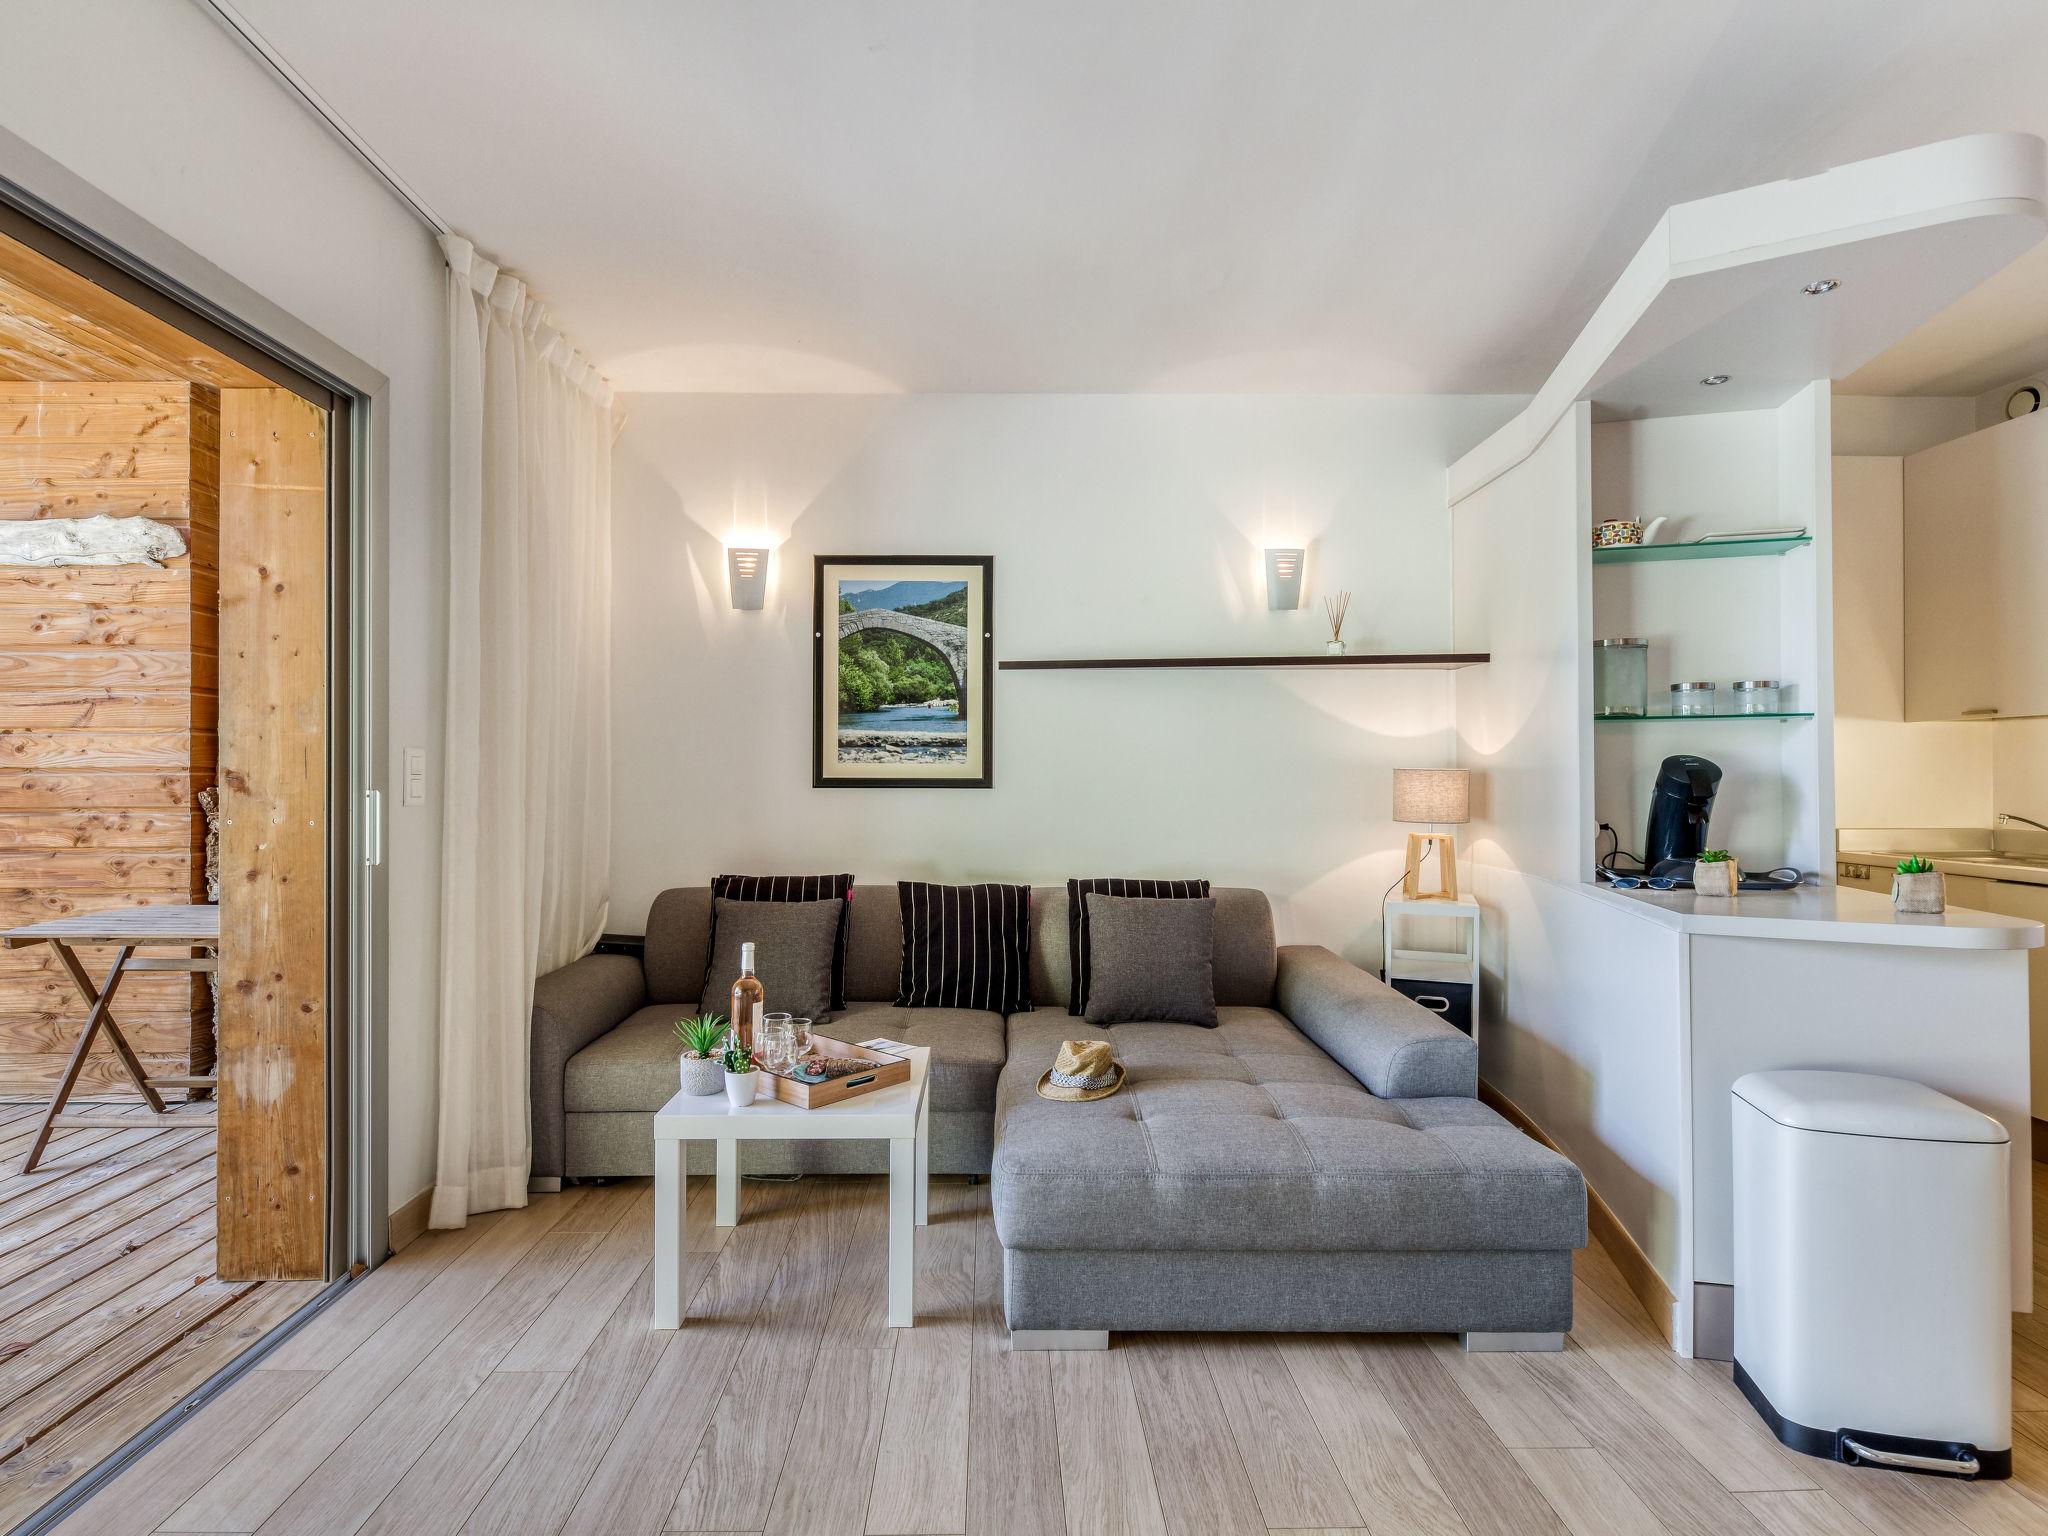 Photo 1 - 2 bedroom Apartment in Porto-Vecchio with swimming pool and sea view